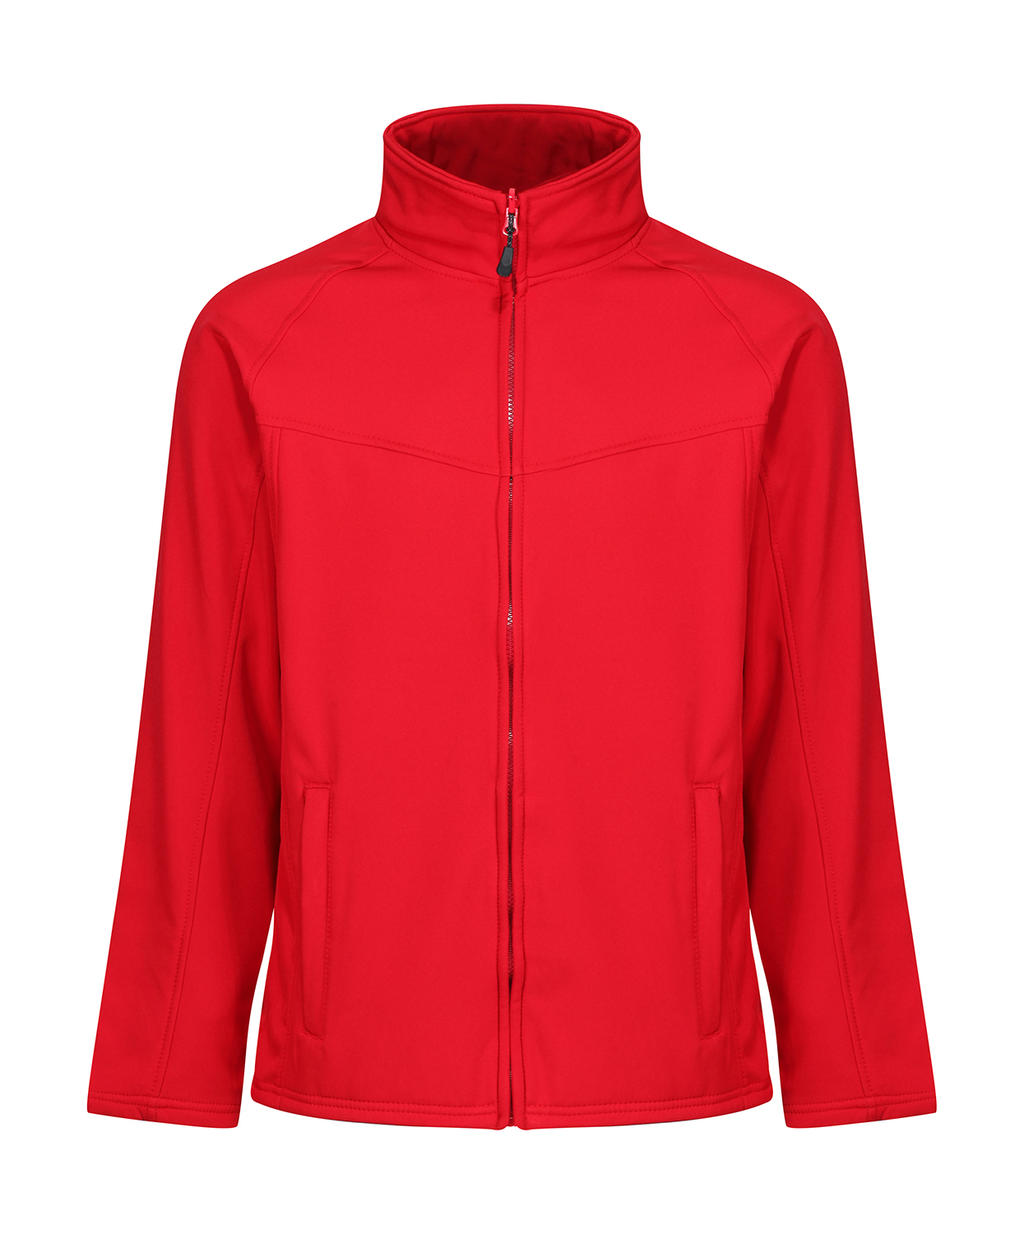 Pánská bunda Regatta Uproar Softshell - červená, XL